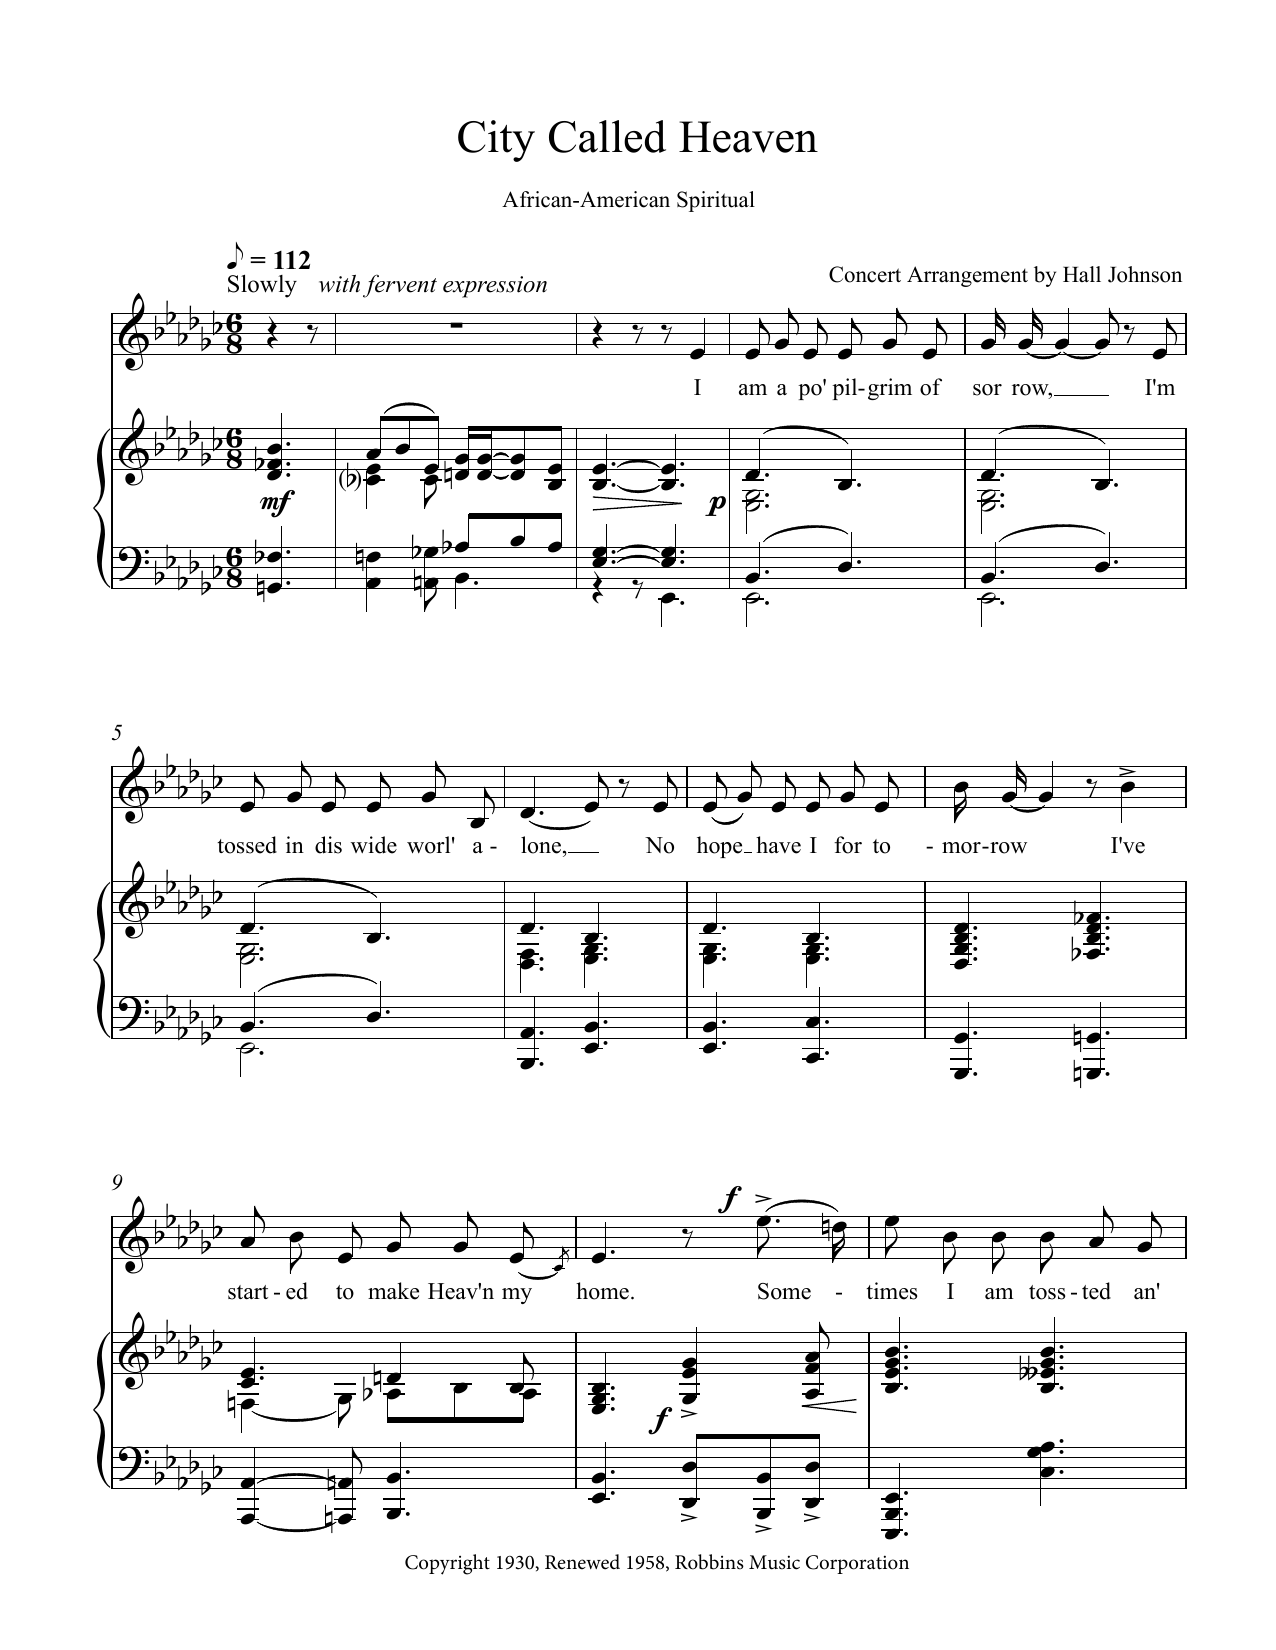 City Called Heaven (E-flat minor) sheet music